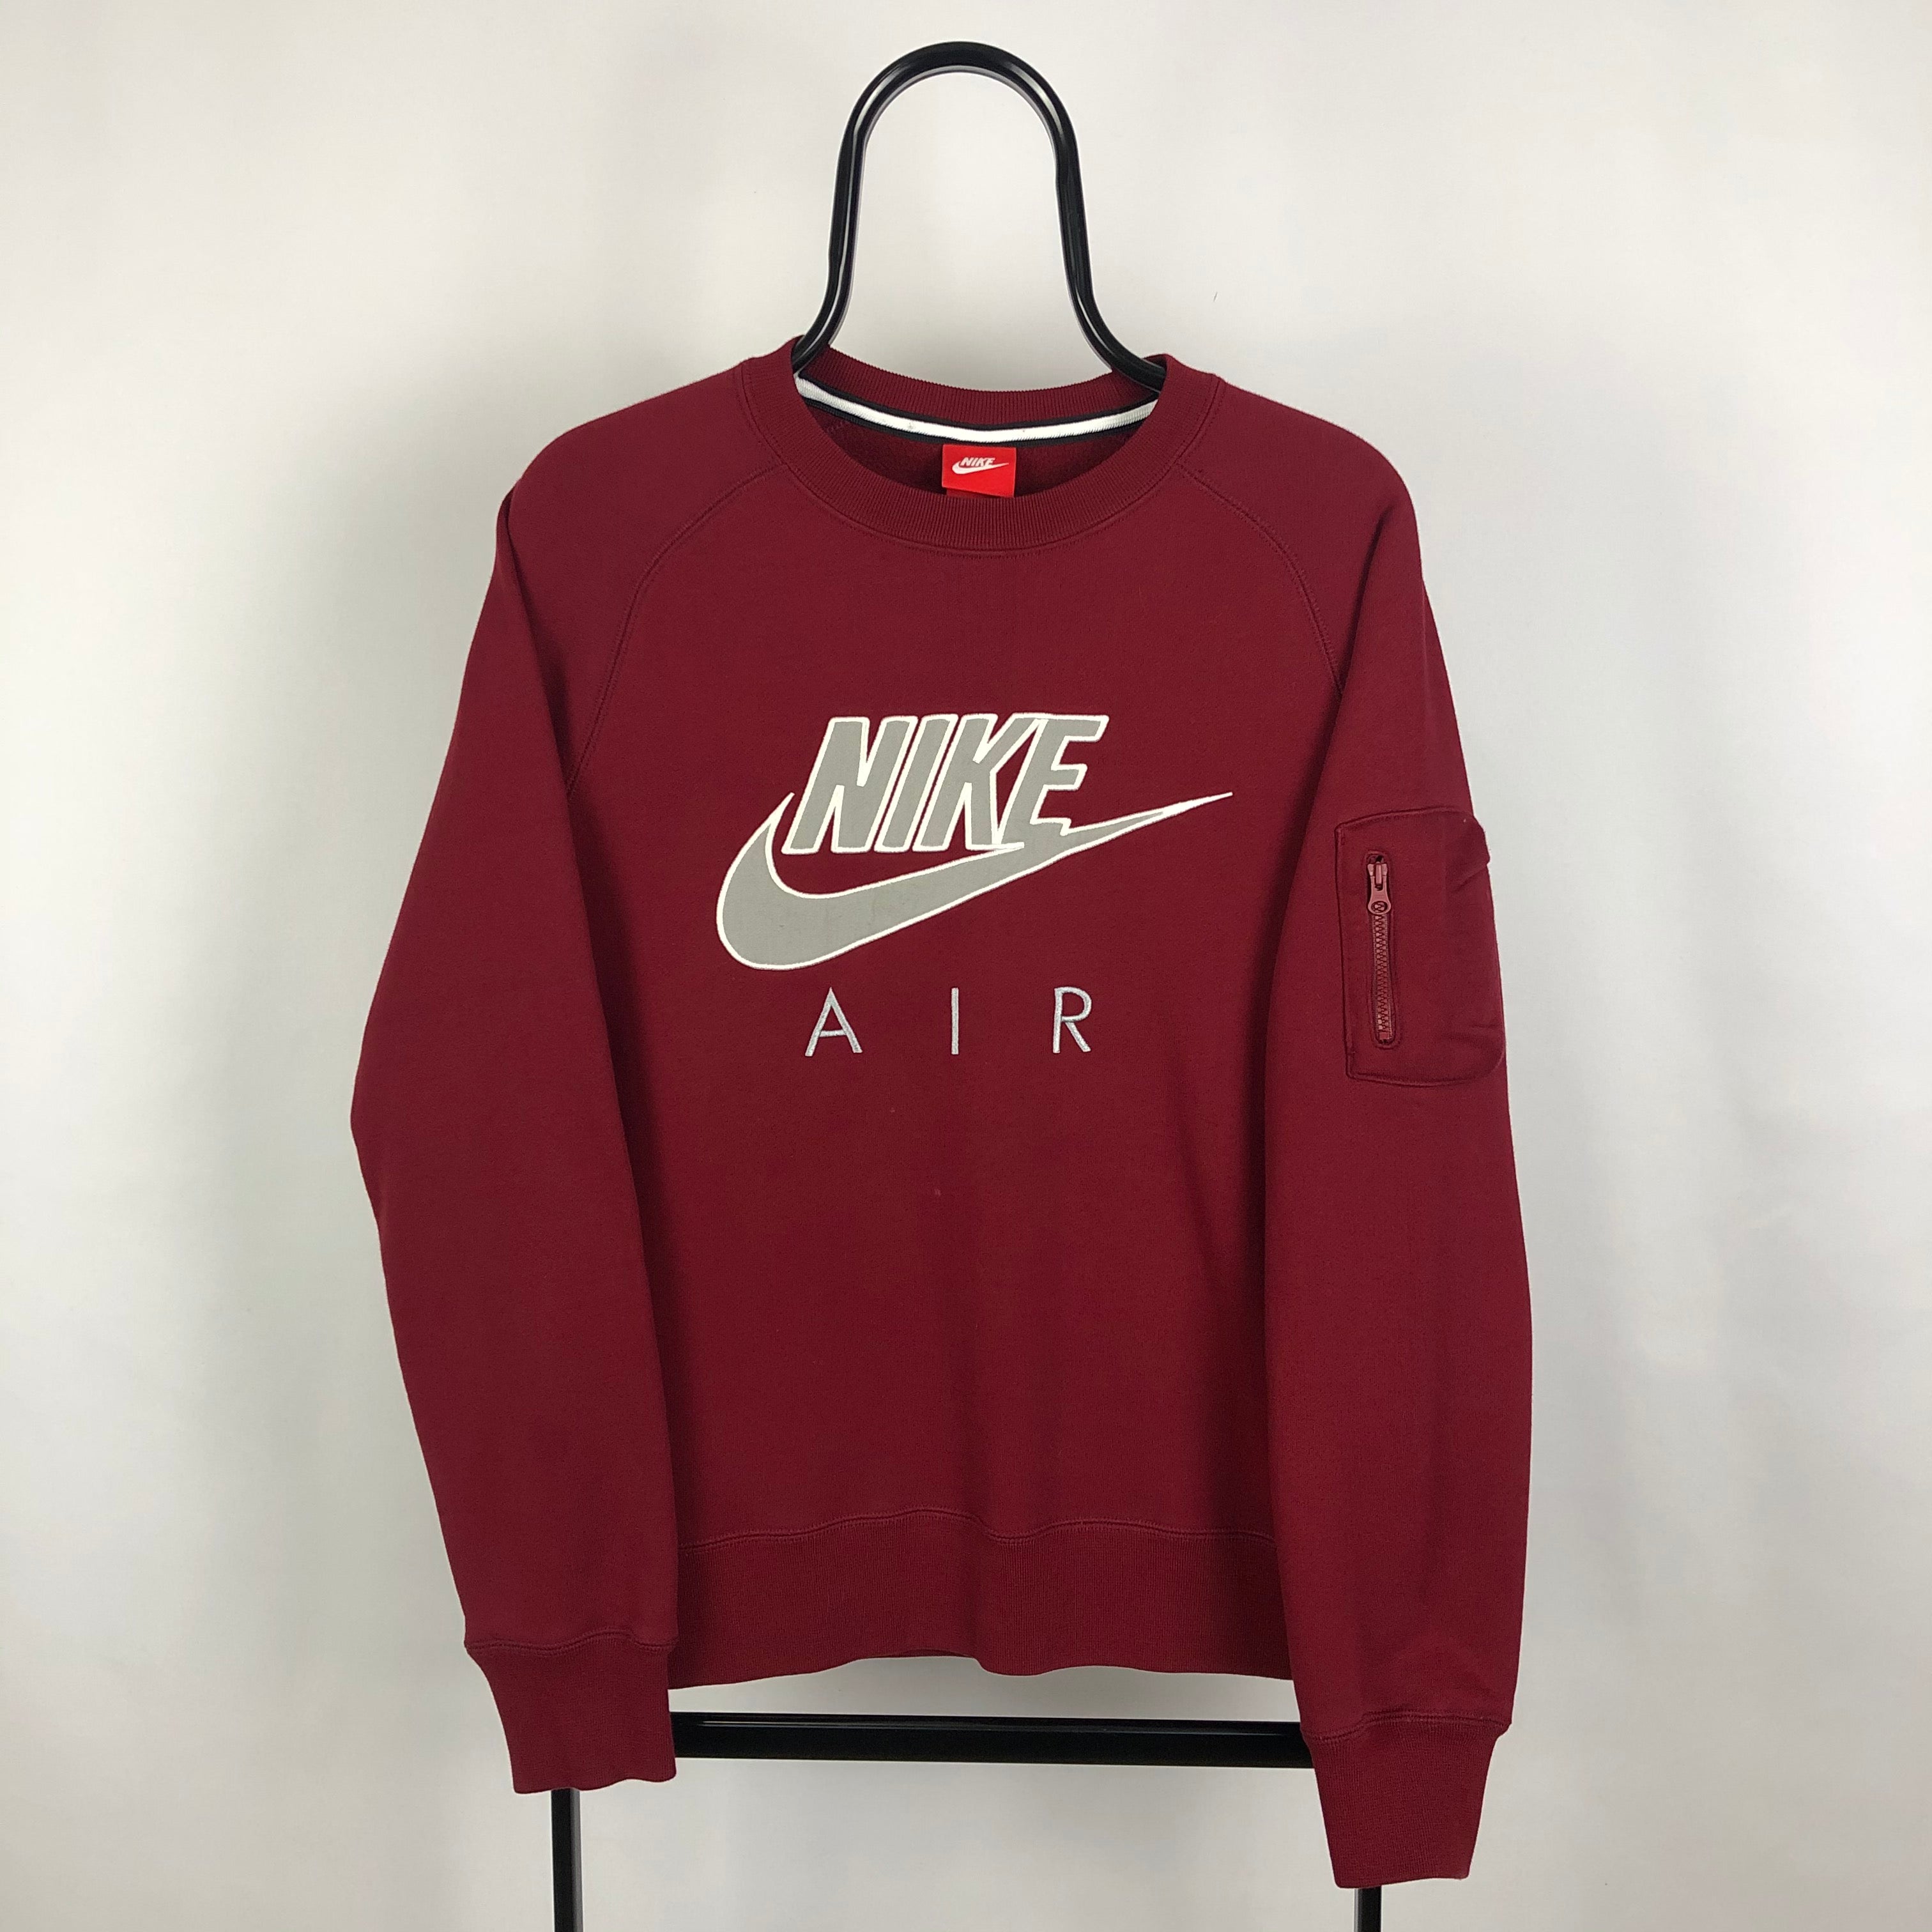 Nike Air Sweatshirt in Burgundy - Men's Medium/Women's Large - Vintique ...